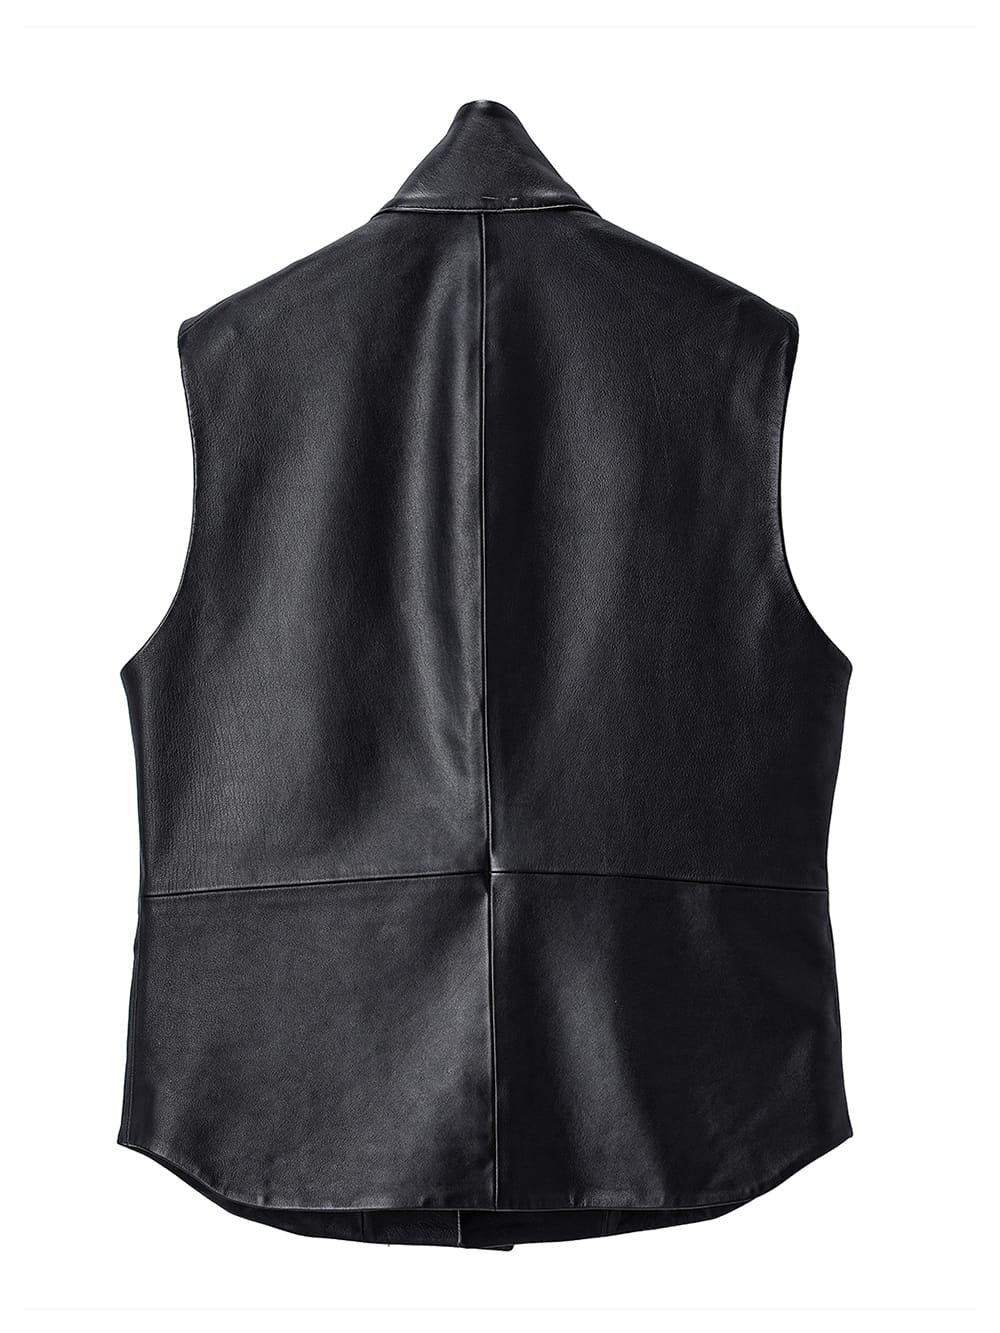 sj.0021bAW23-black right - left sleeveless victorian jacket 